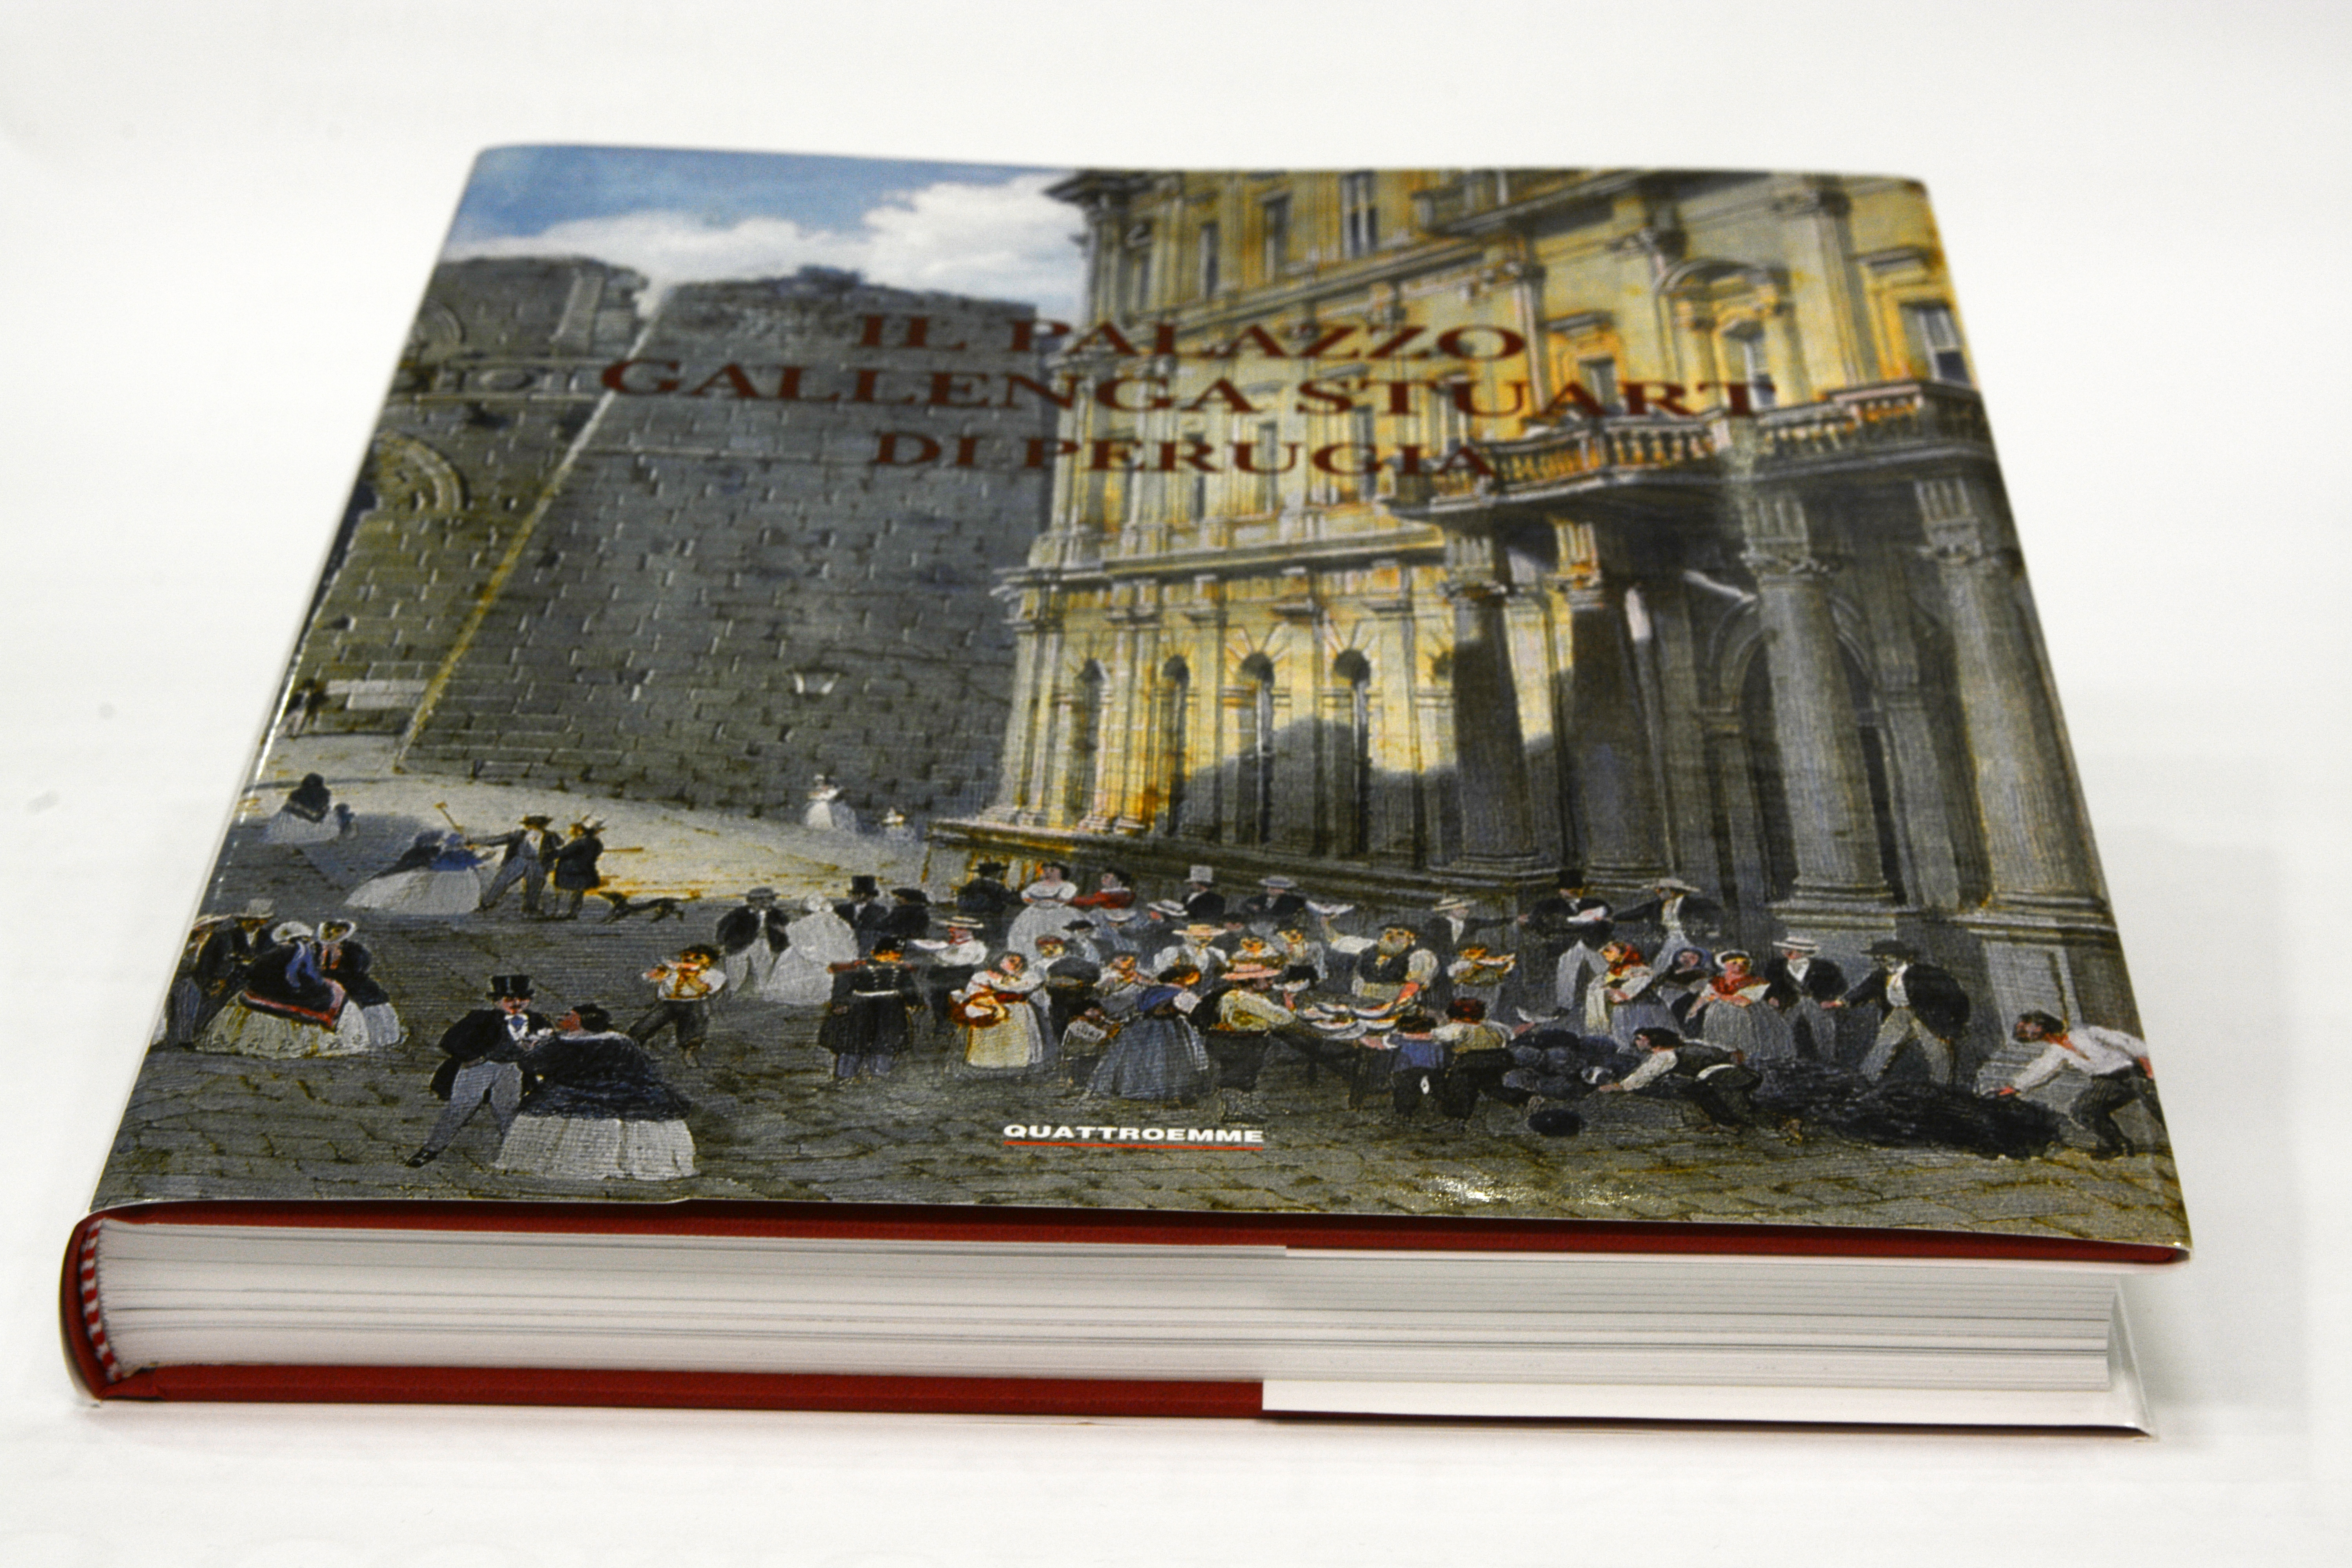 BOOK “The Gallenga Stuart Palace of Perugia”